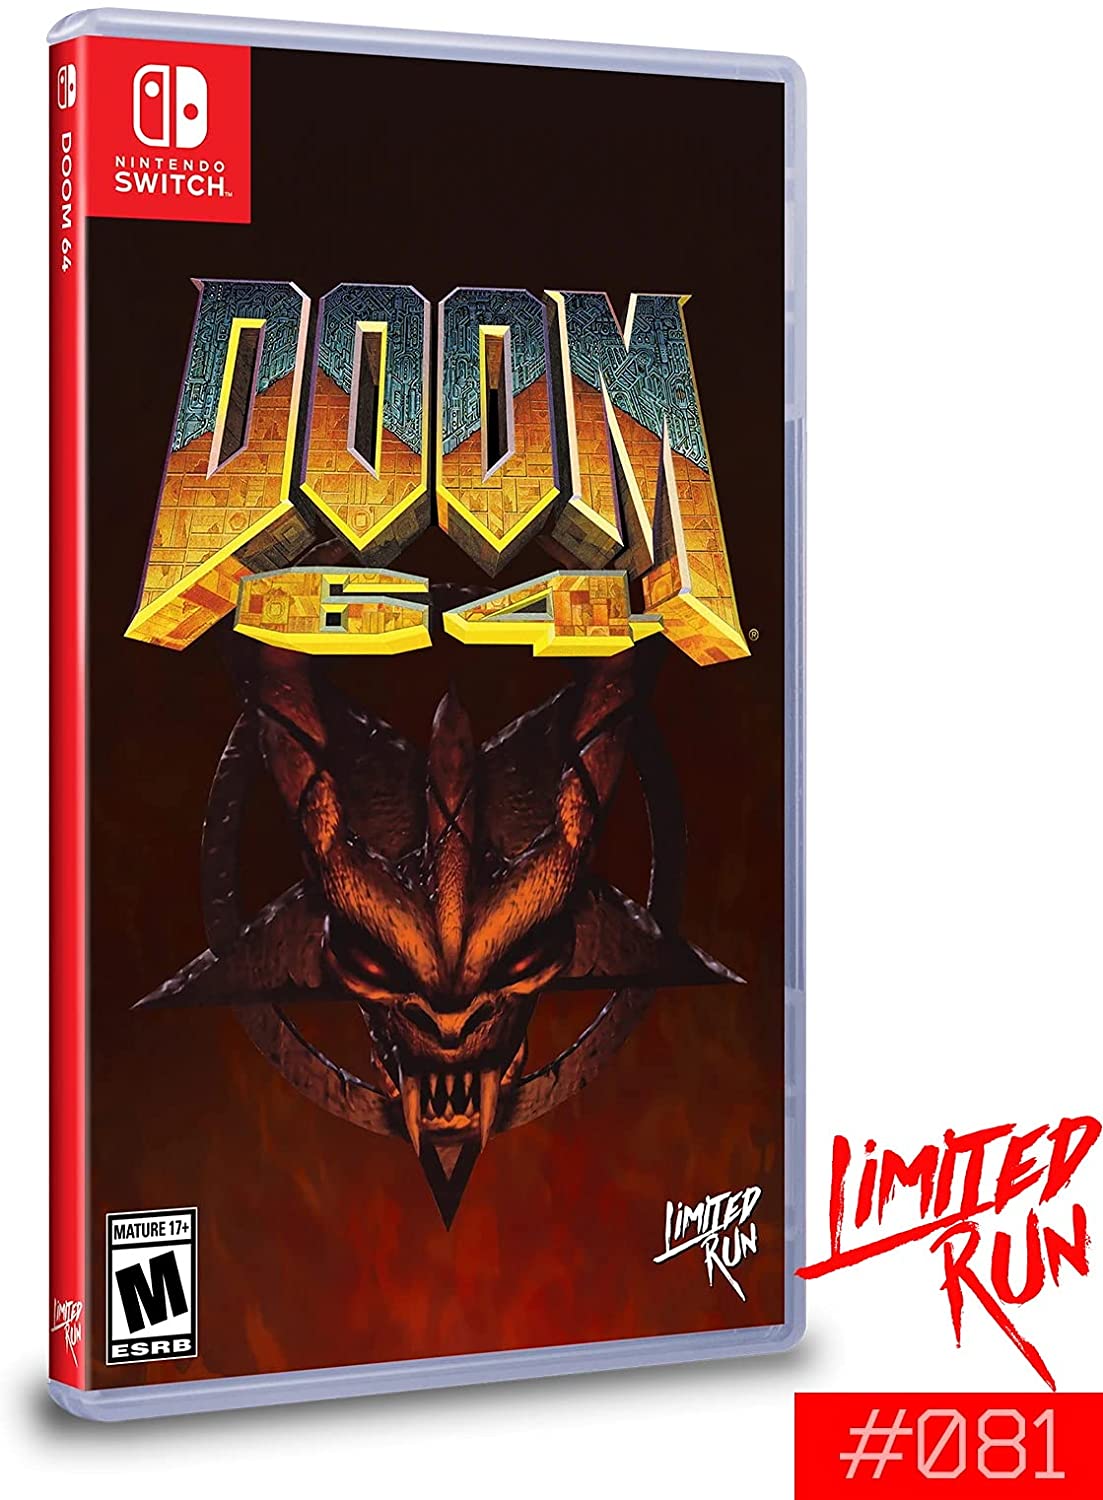 Doom 64 (Limited Run) (Switch), Limited Run